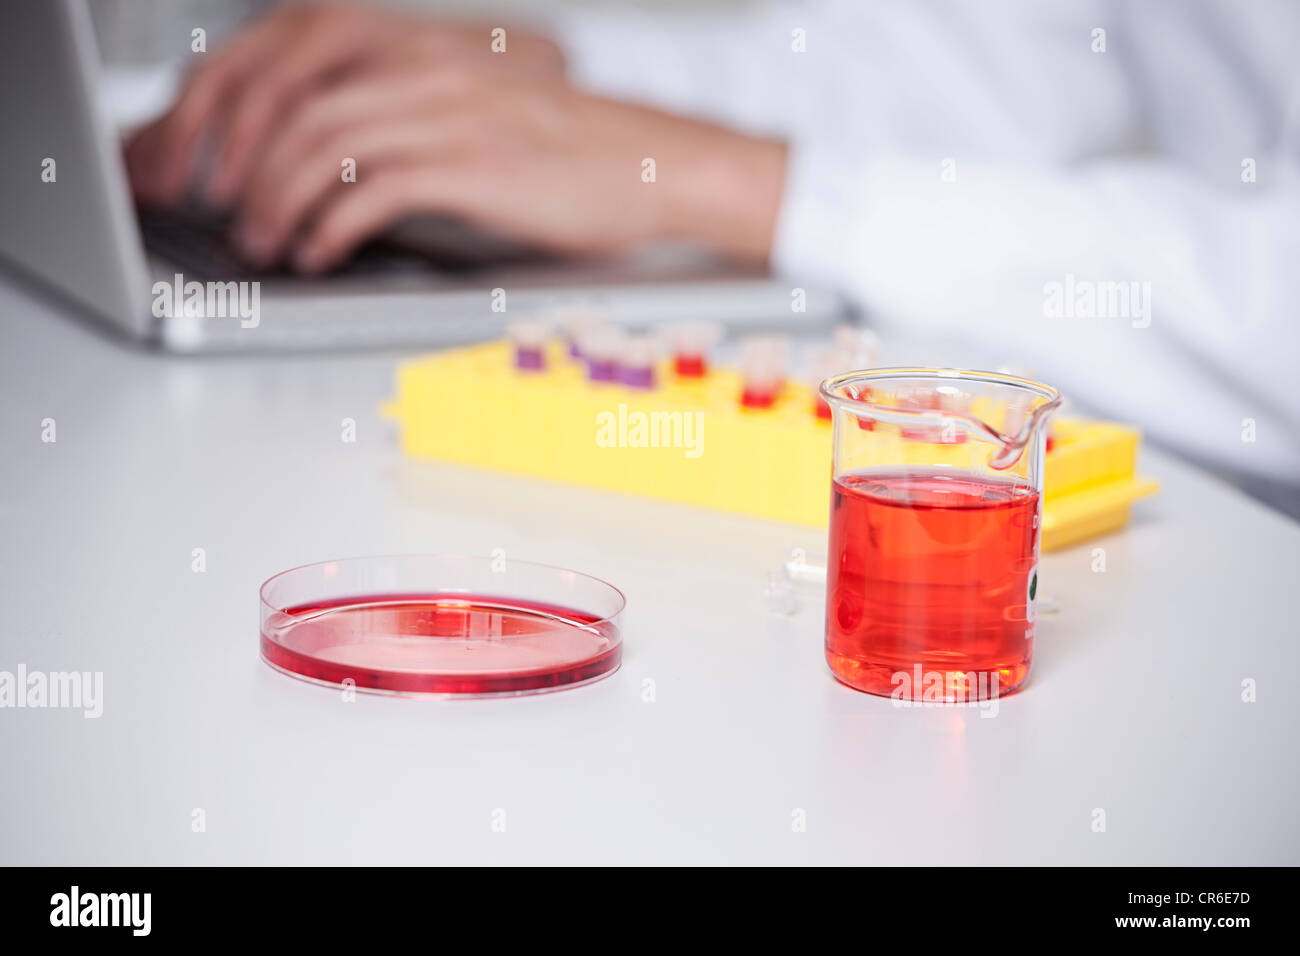 Germany, Bavaria, Munich, Red liquid in beaker and petri dish, scientist using laptop Stock Photo